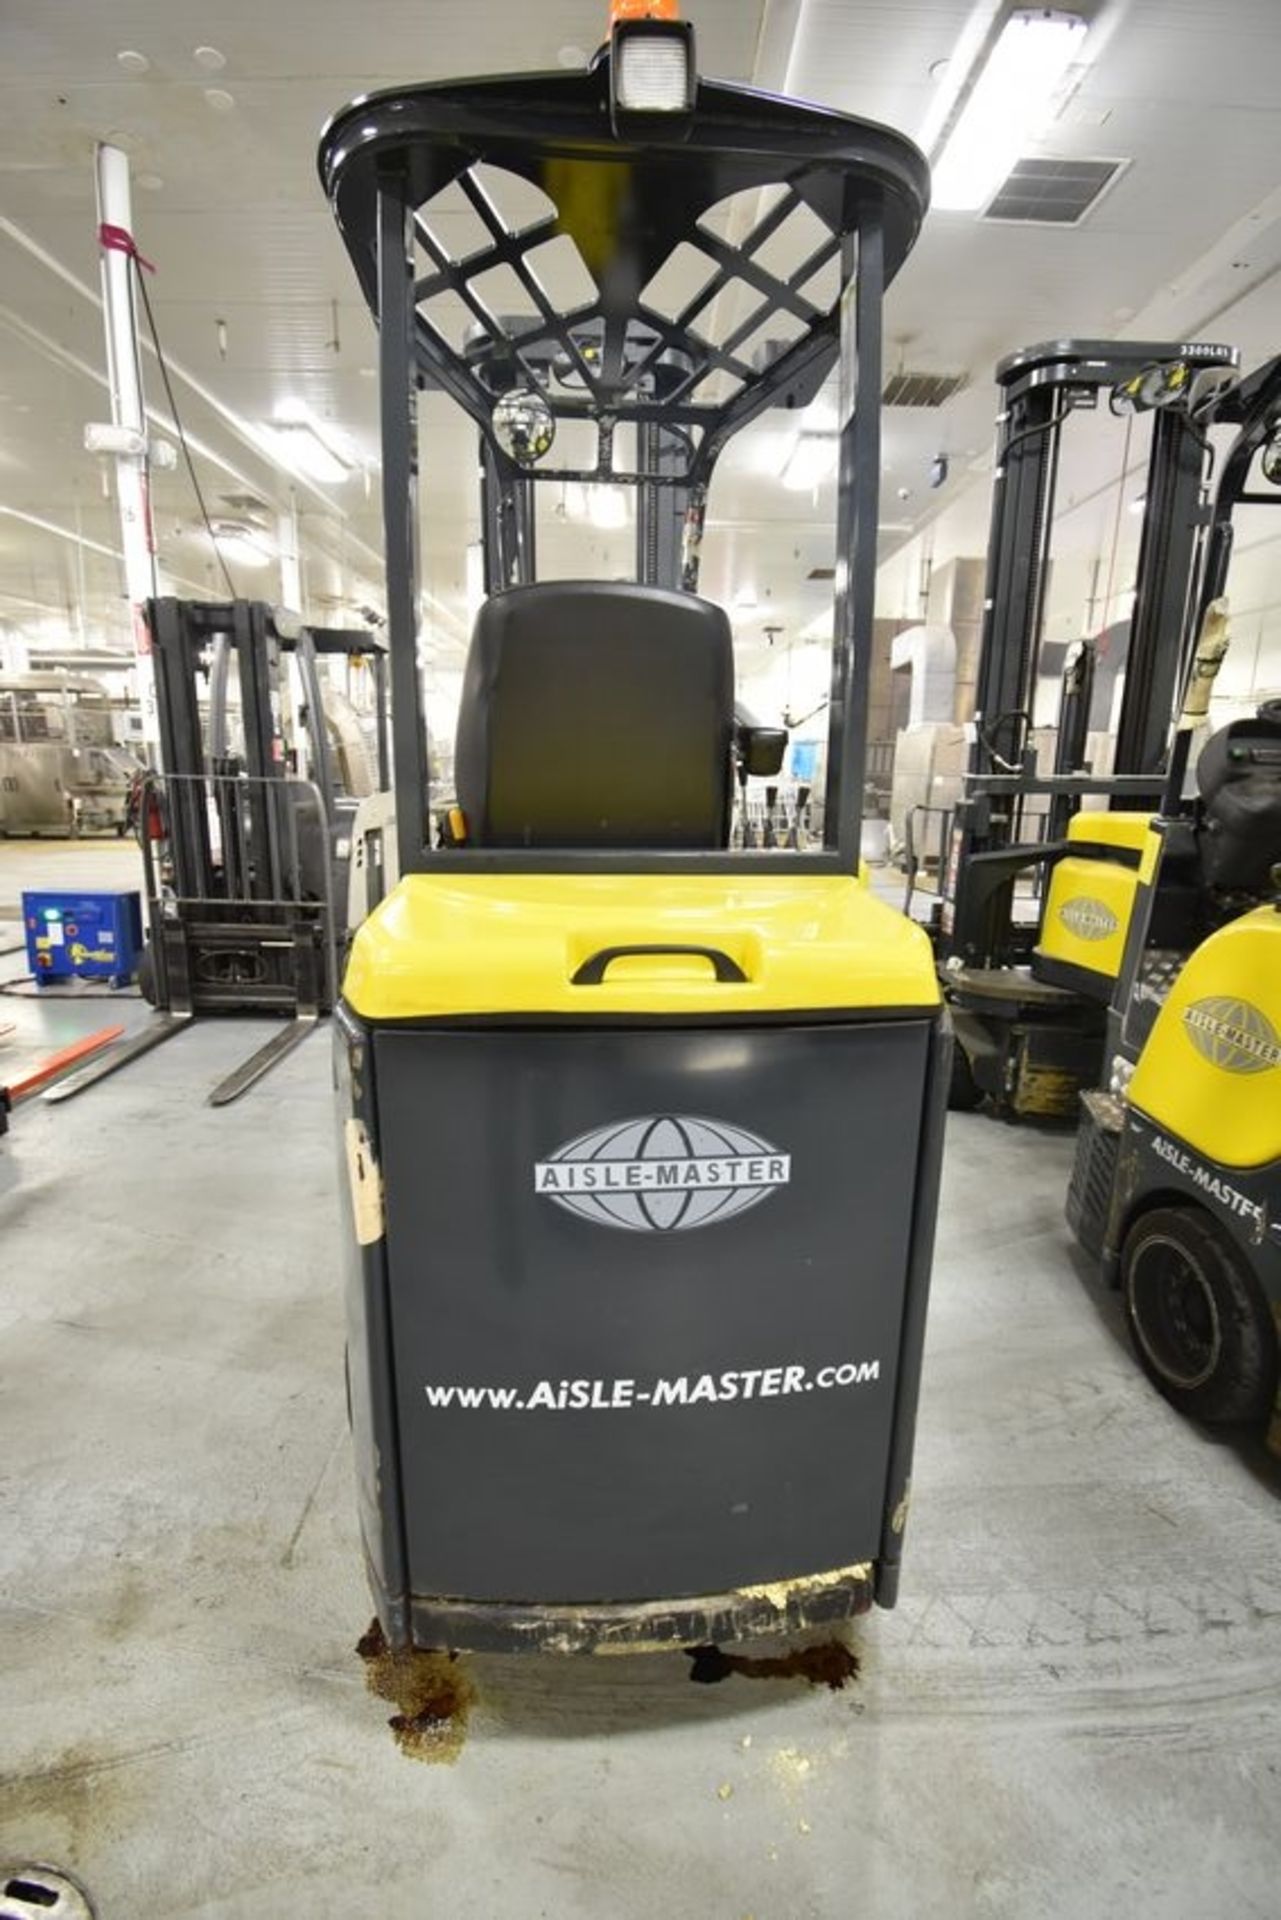 Aisle-master | Aisle-Master Electric Narrow Aisle Forklift Model 33E, S/N 25139. 3000lbs capacity, - Image 2 of 4